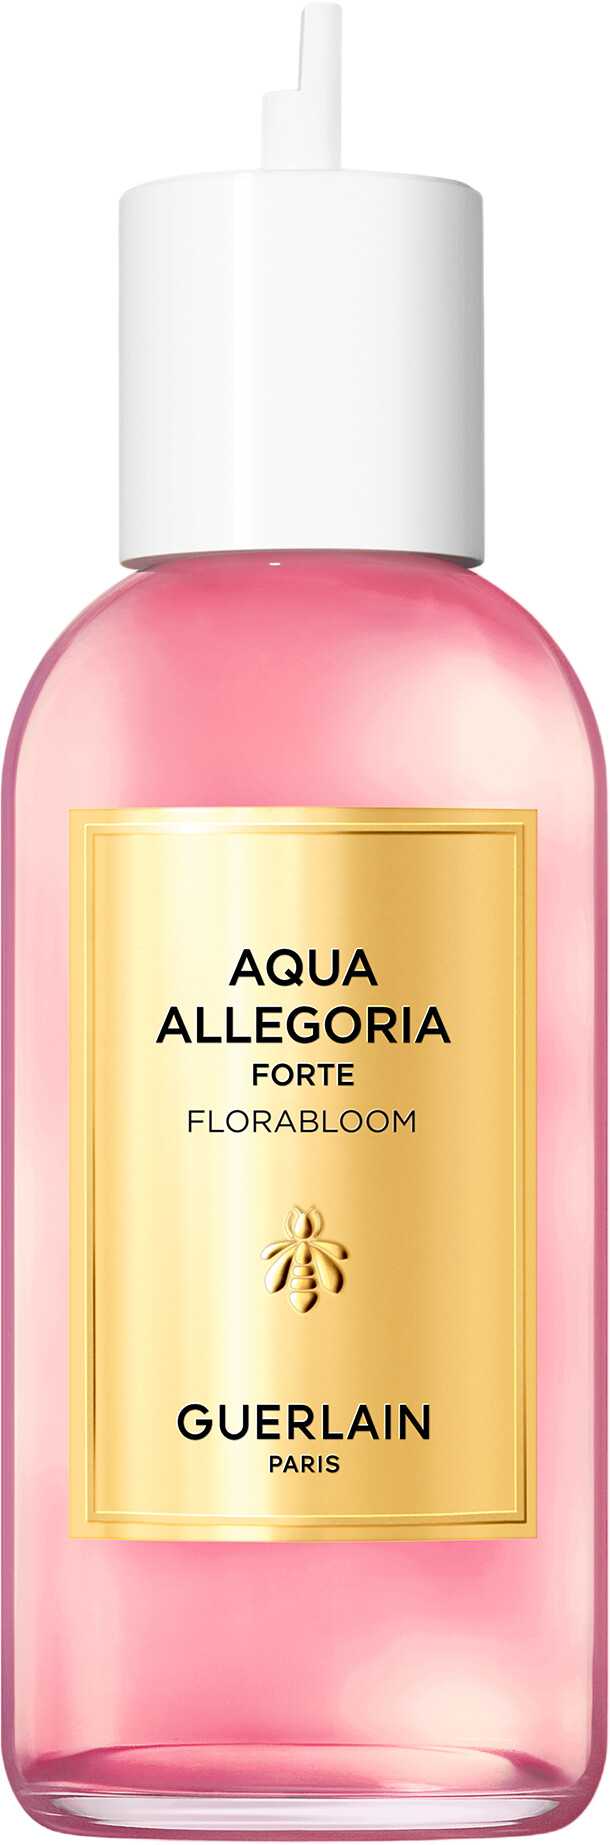 GUERLAIN Aqua Allegoria Forte FloraBloom Eau de Parfum Spray Refill 200ml